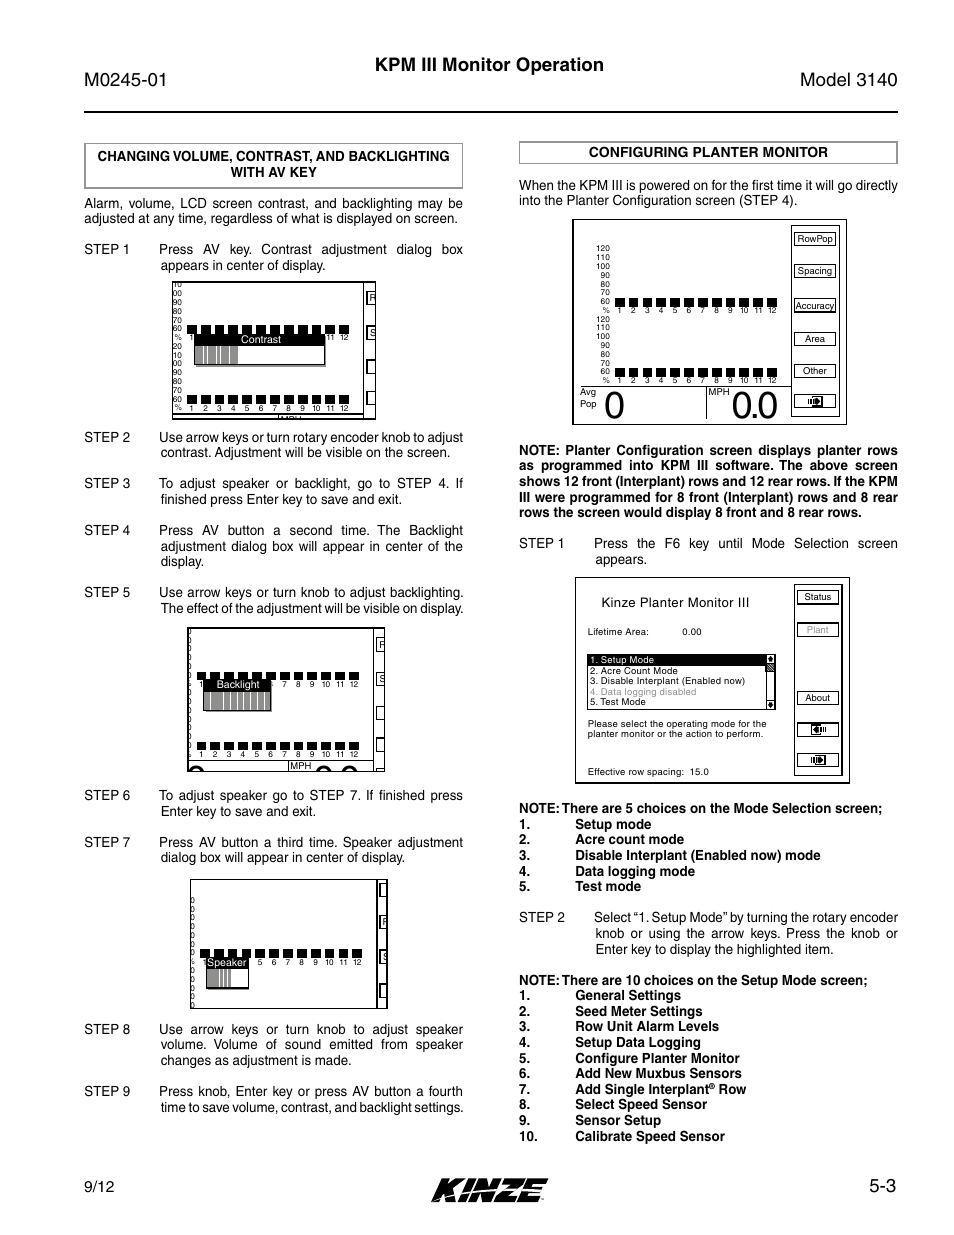 Configuring planter monitor -3, 3 kpm iii monitor operation | Kinze 3140 Stack Fold Planter Rev. 7/14 User Manual | Page 83 / 150